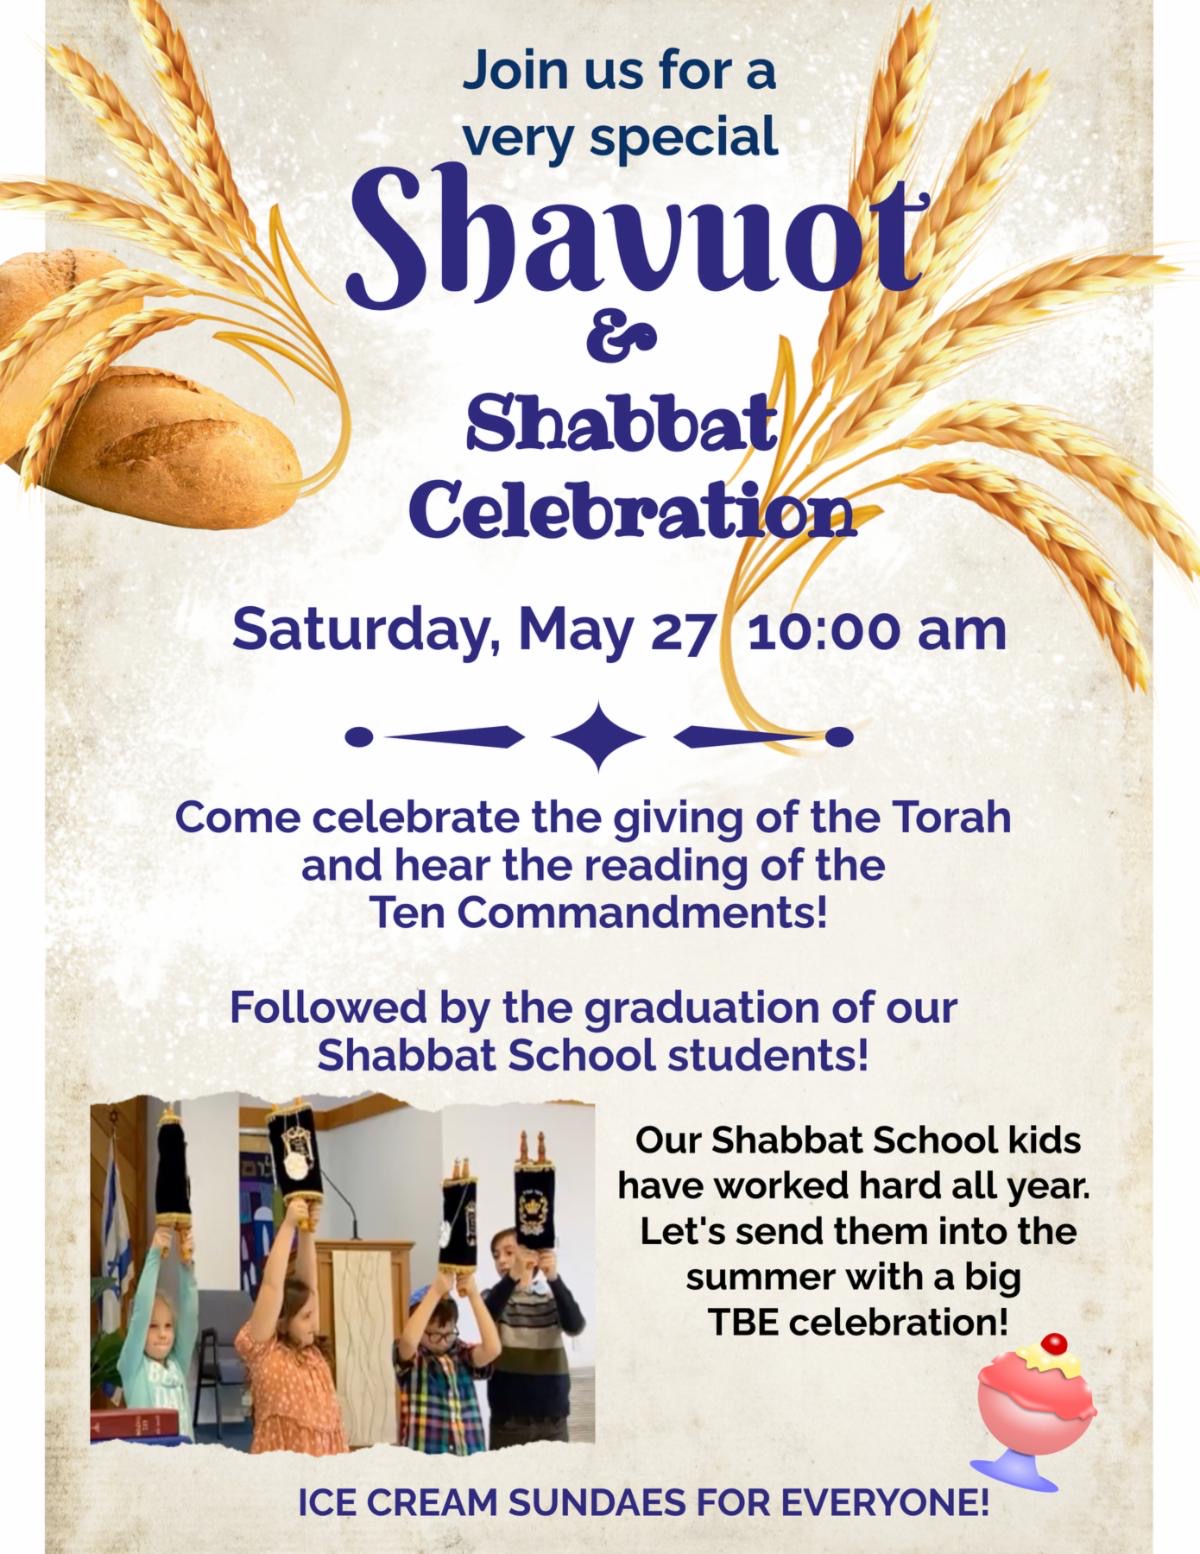 Shavuot at Temple Beth El Bradenton/Lakewood Ranch